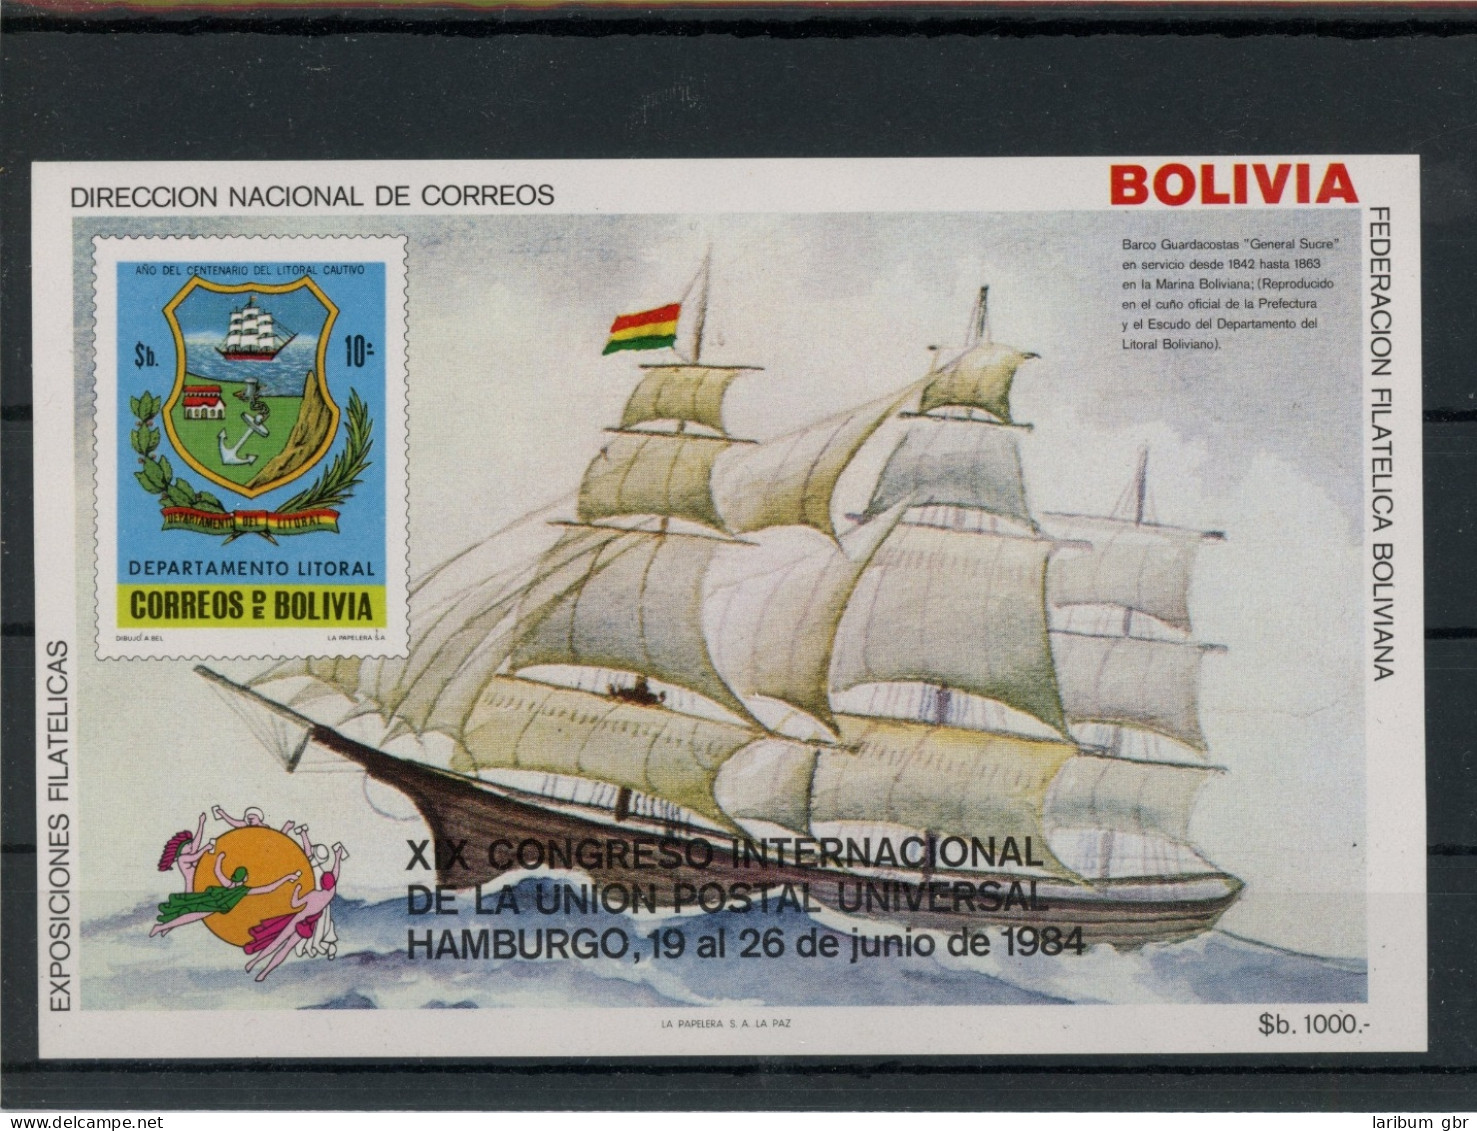 Bolivien Block 137 Postfrisch Segelschiff #HK851 - Bolivien